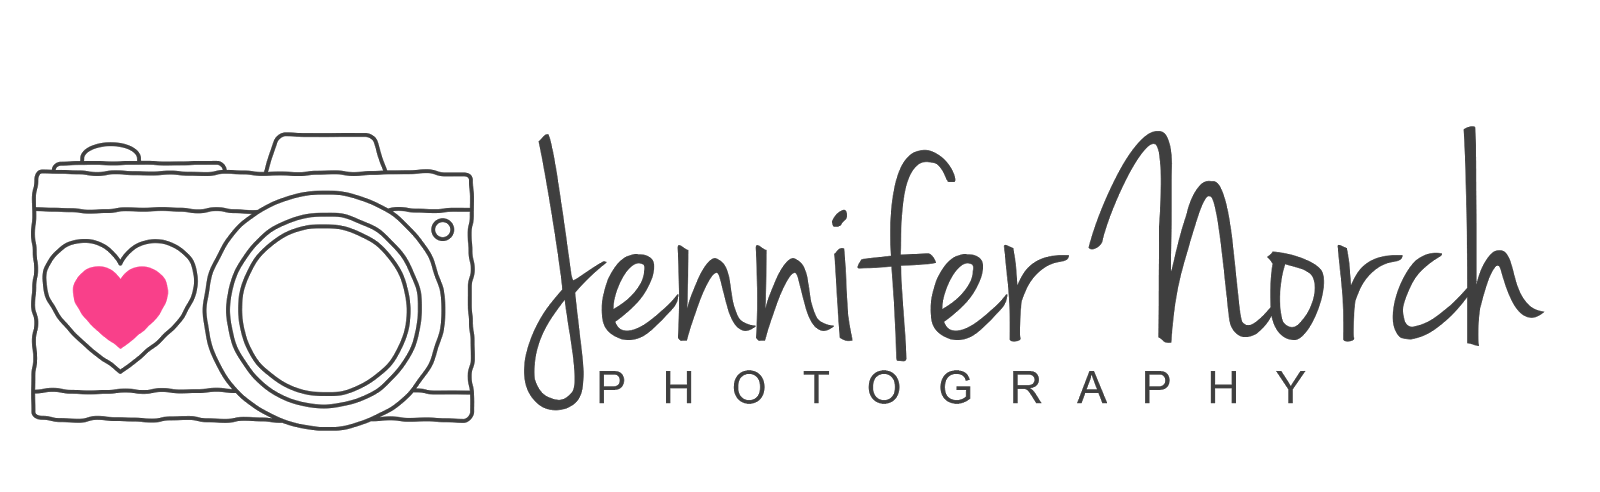 Jennifer Norch Photography